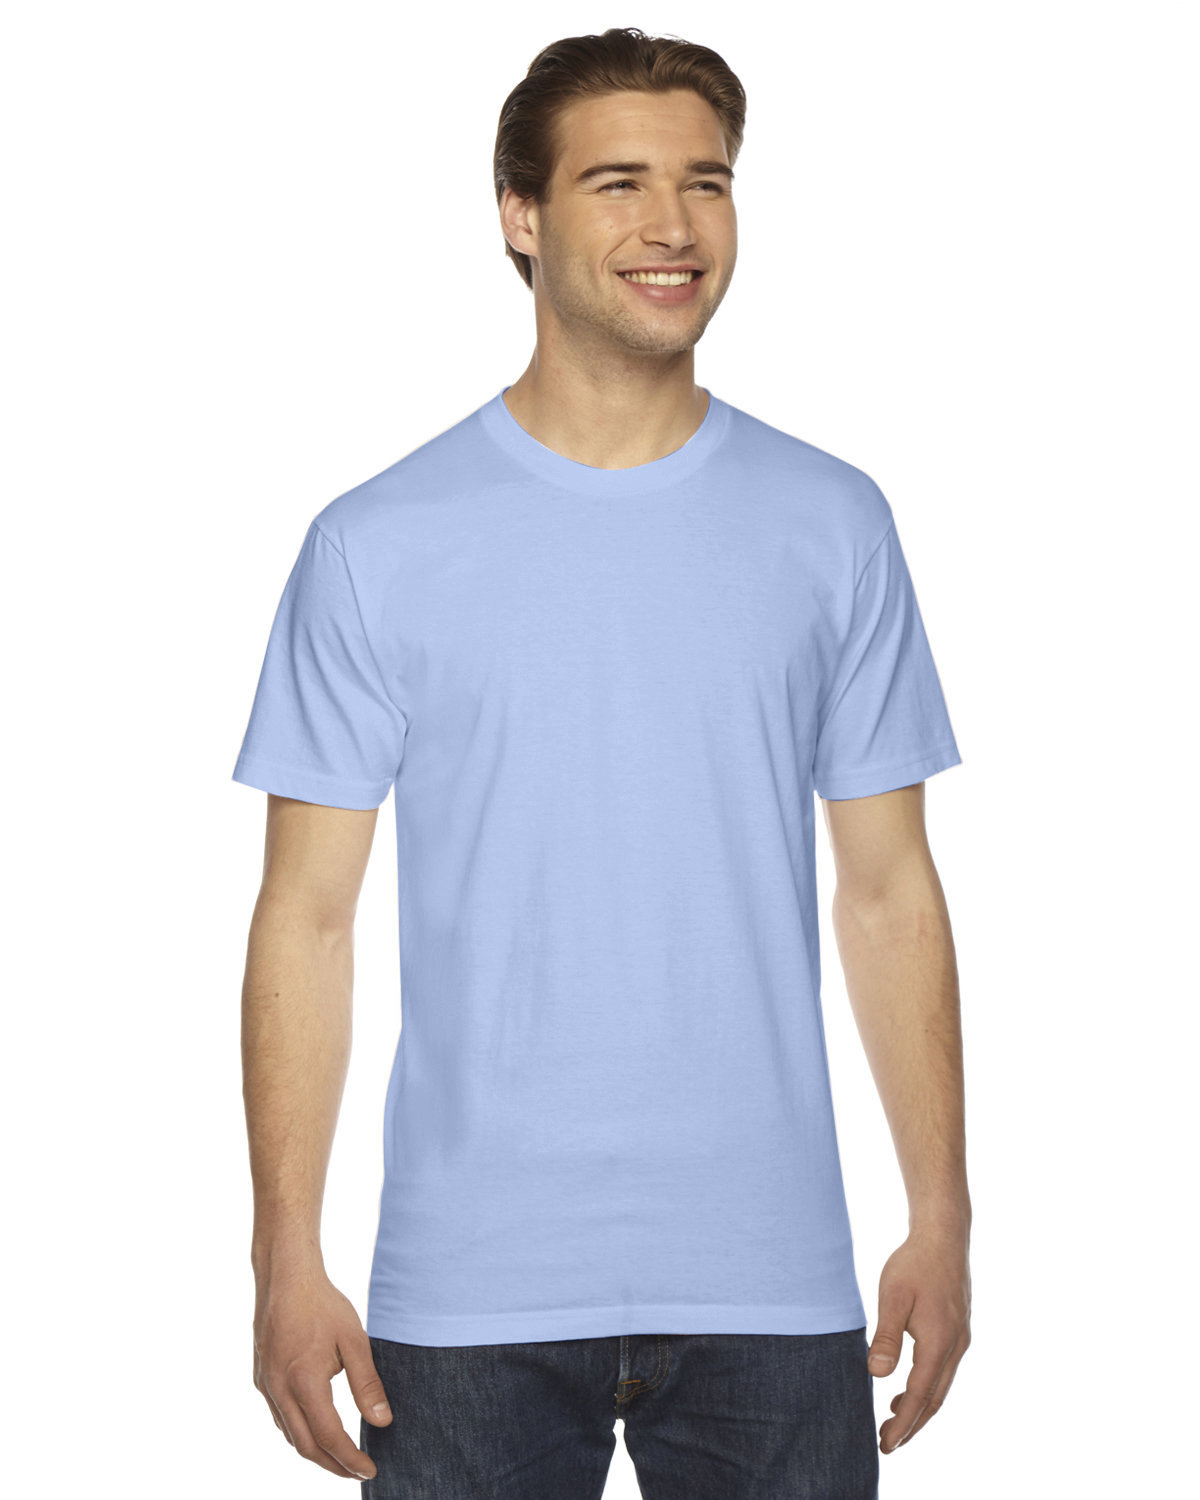 American Apparel Unisex Fine Jersey USA Made T-Shirt baby blue 